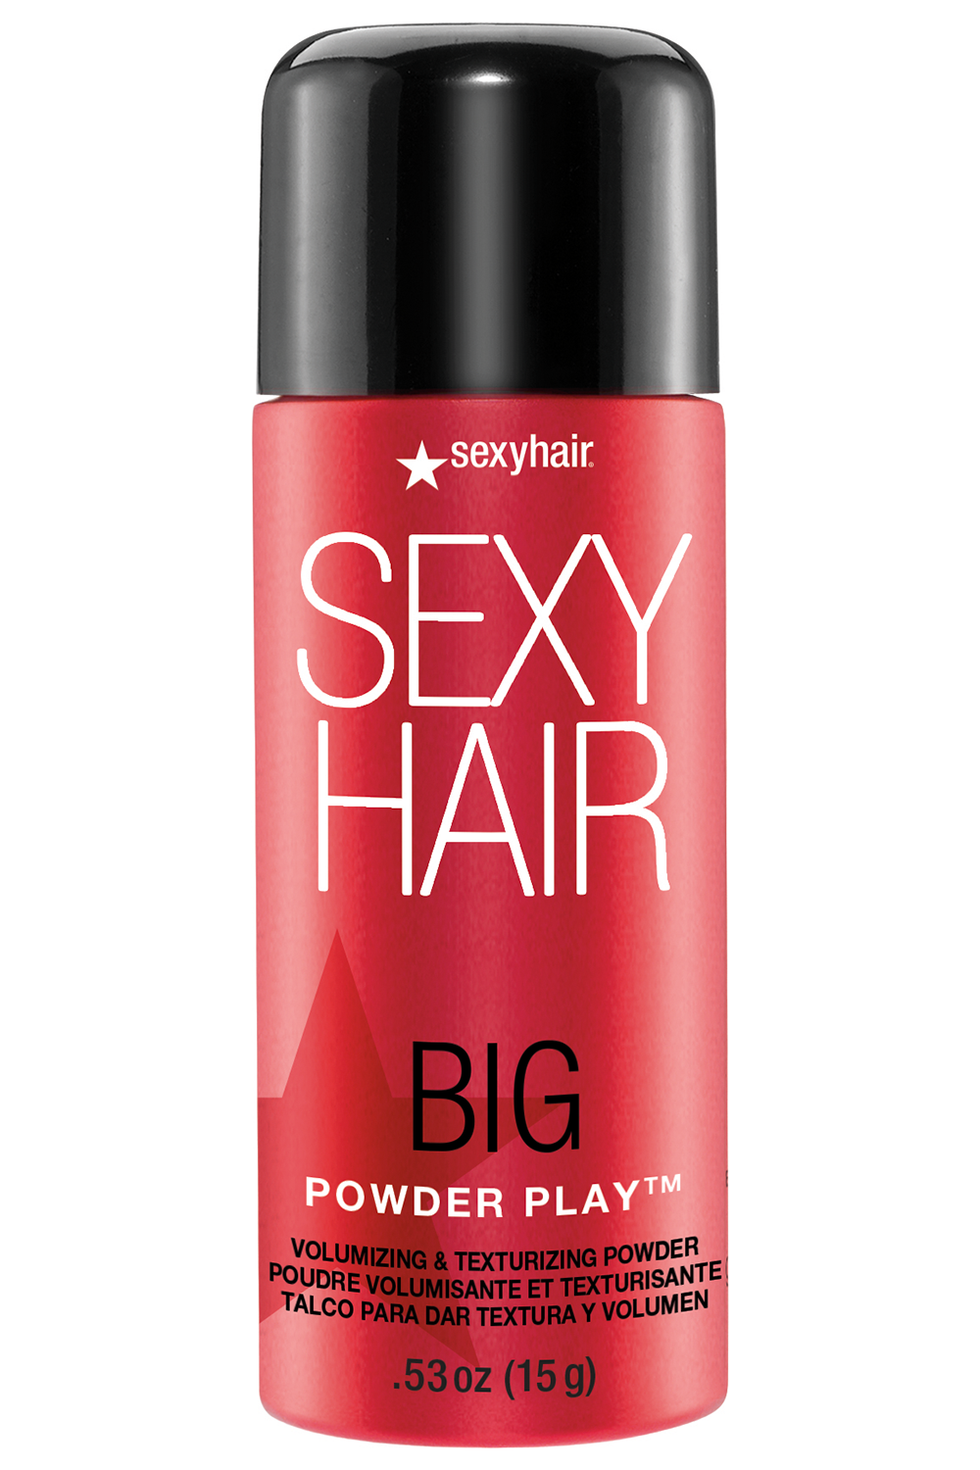 Big Sexy Hair Spray And Play Hairspray Volumizing Hairspray 8oz 3